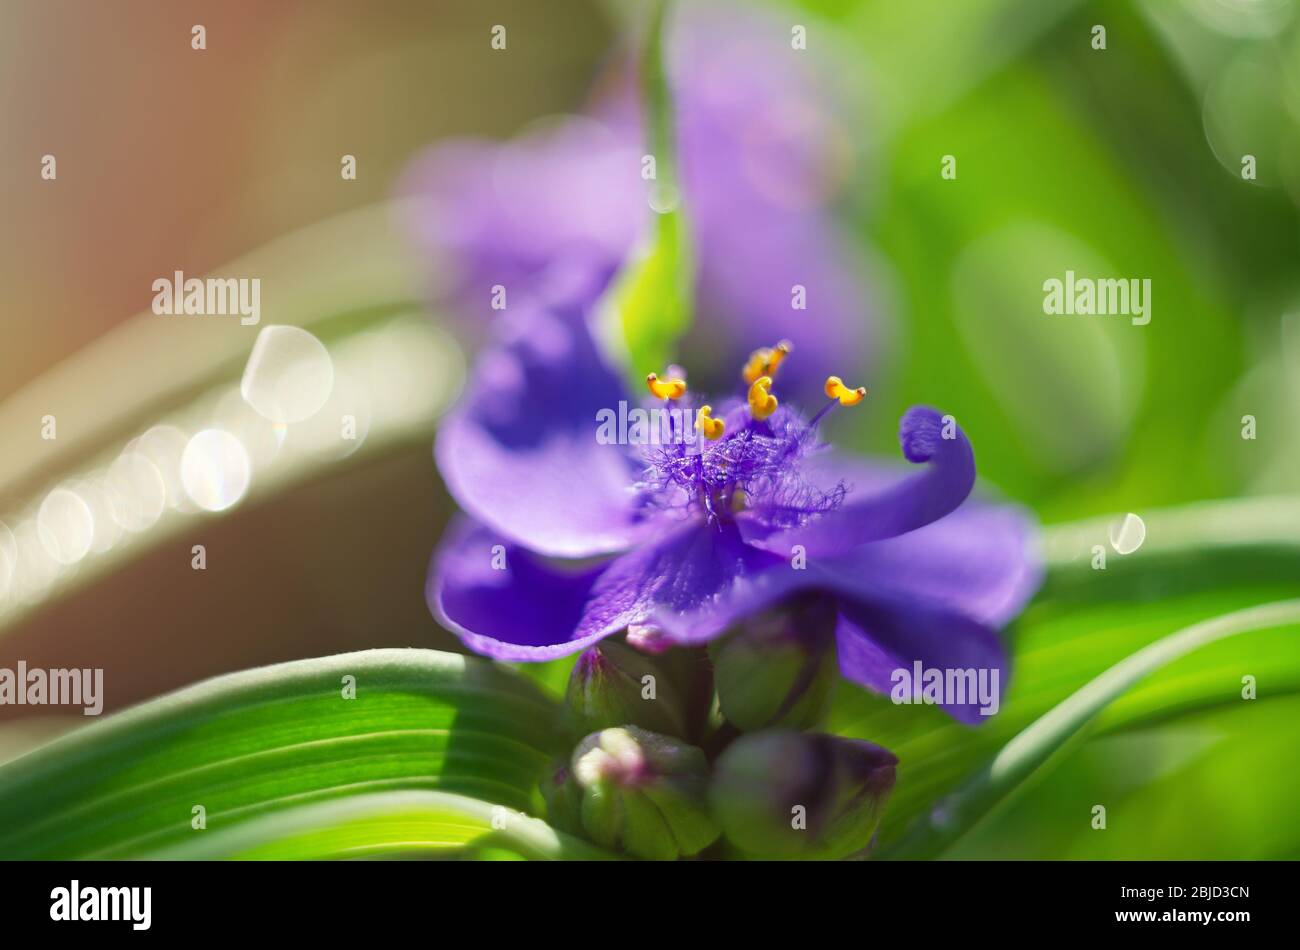 Flower of tradescantia close-up. Soft selective focus Stock Photo